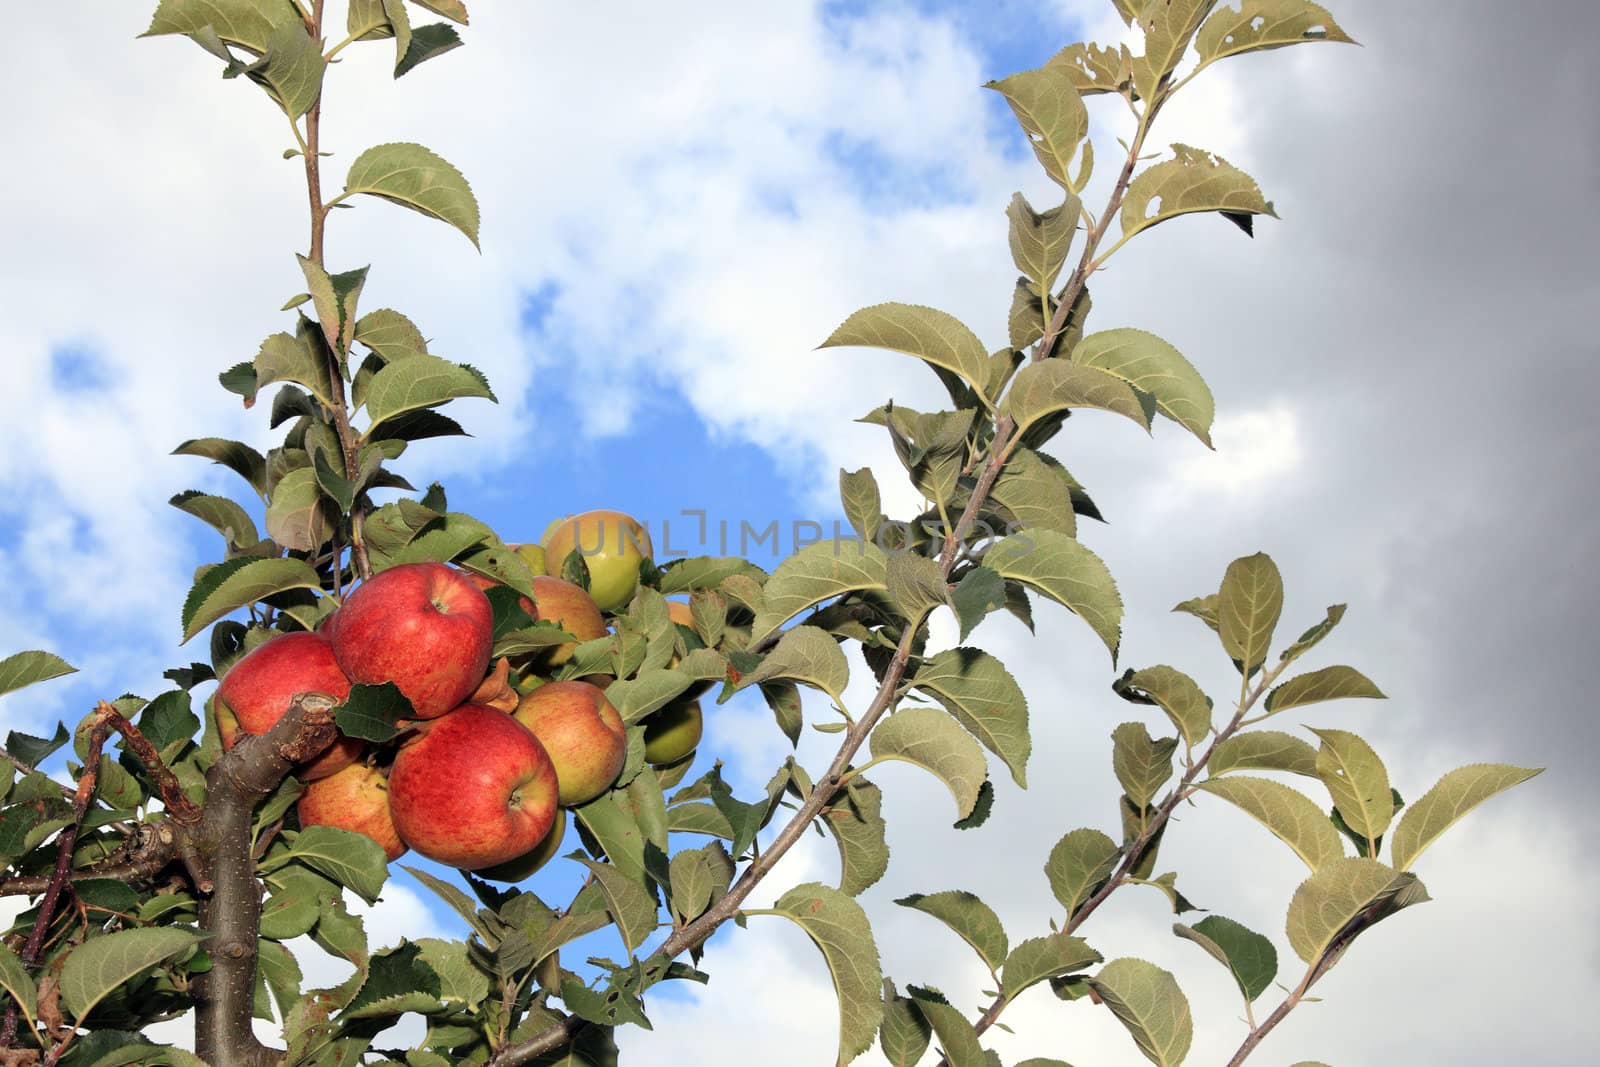 Branch with ripe apples by ahavelaar